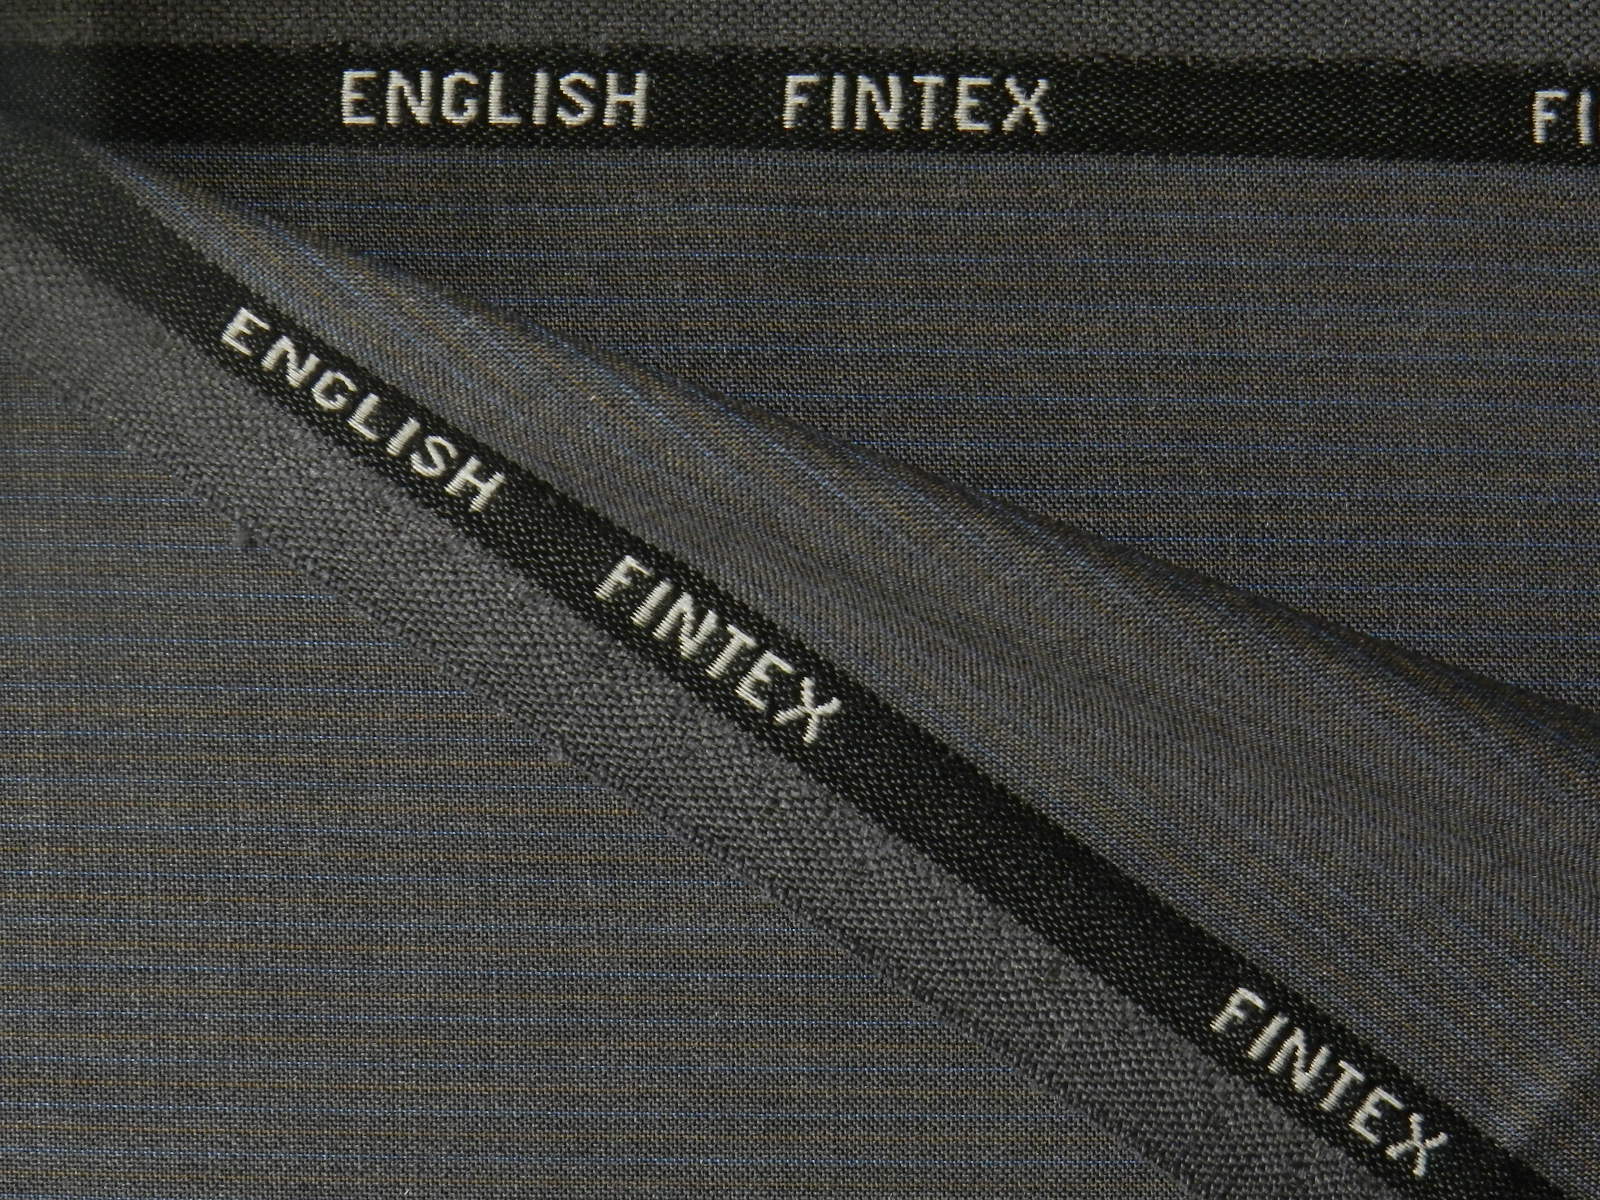 FINTEX of LONDON（フィンテックス・オブ・ロンドン） / ENGLISH FINTEX / LONDON / モヘア（毛） / グレー / ストライプ / 表記無し